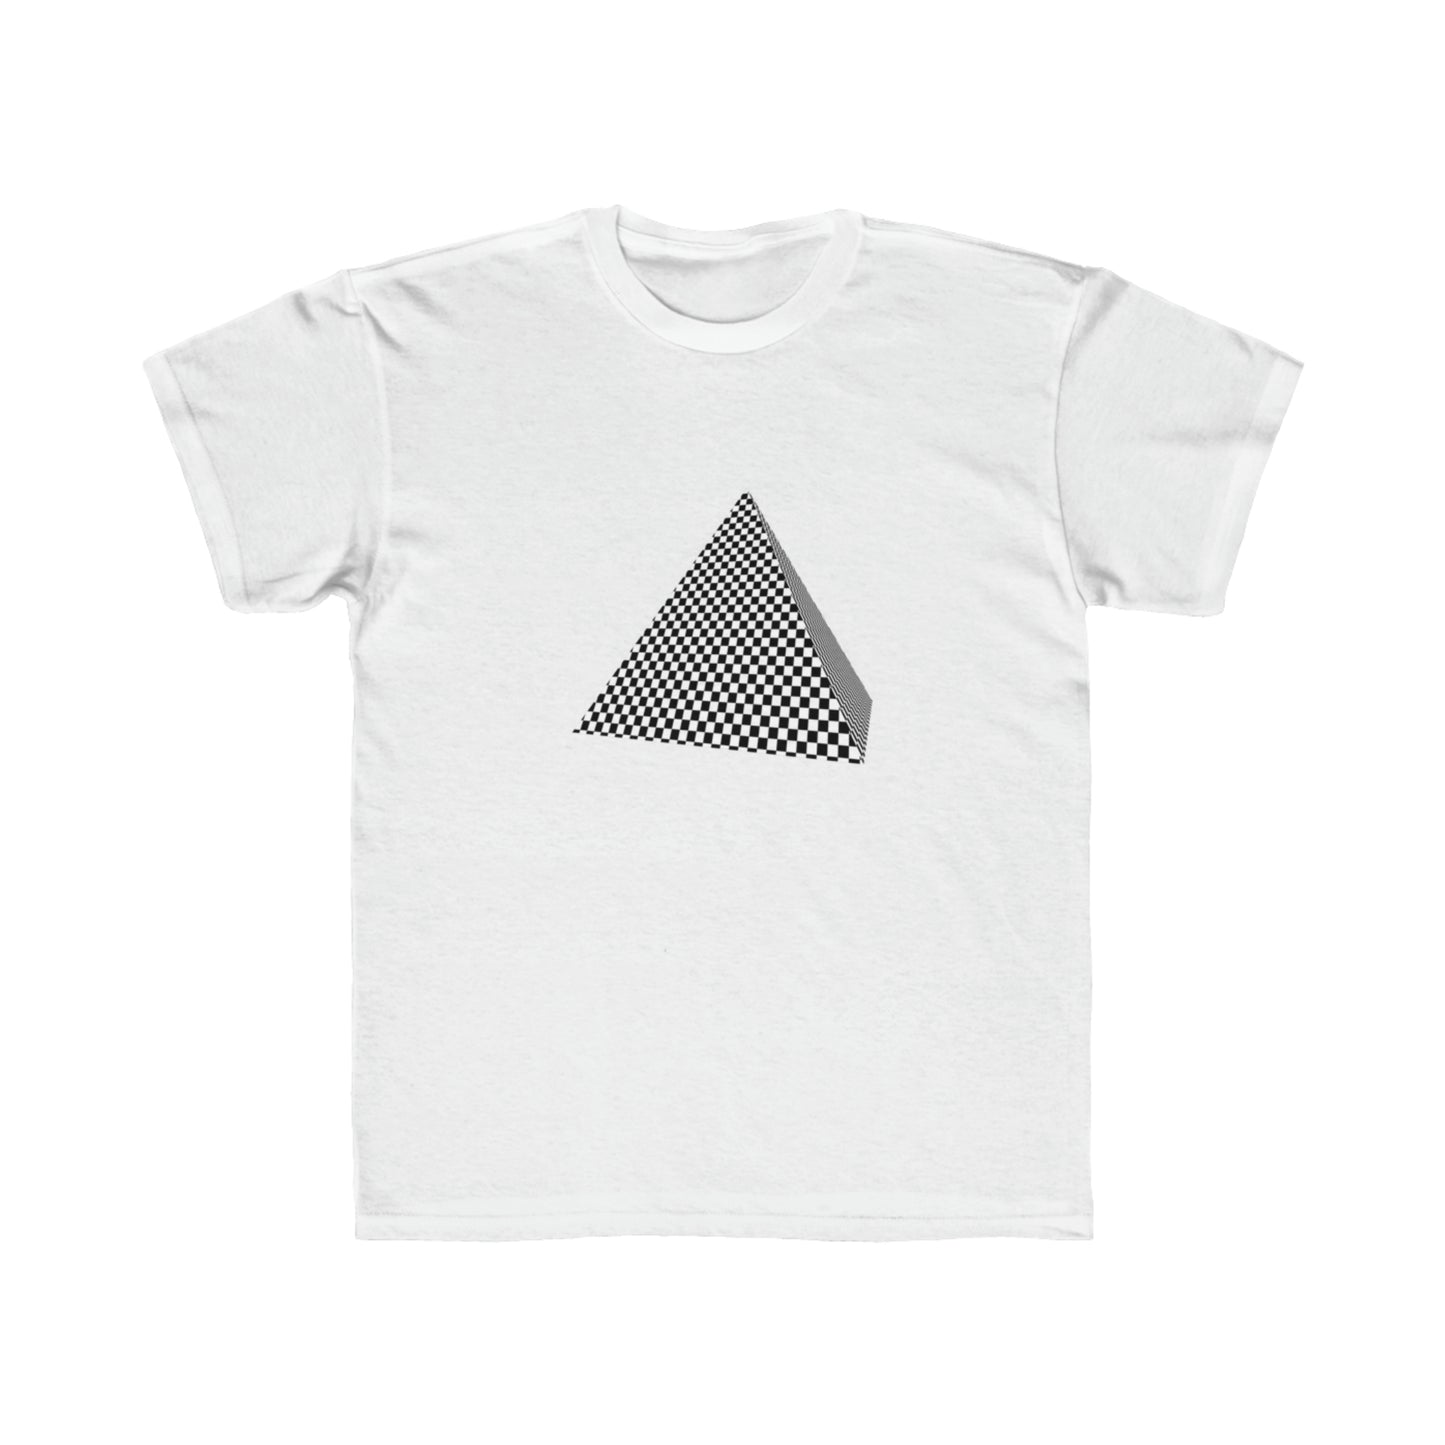 Floor Pyramid Kids T-Shirt